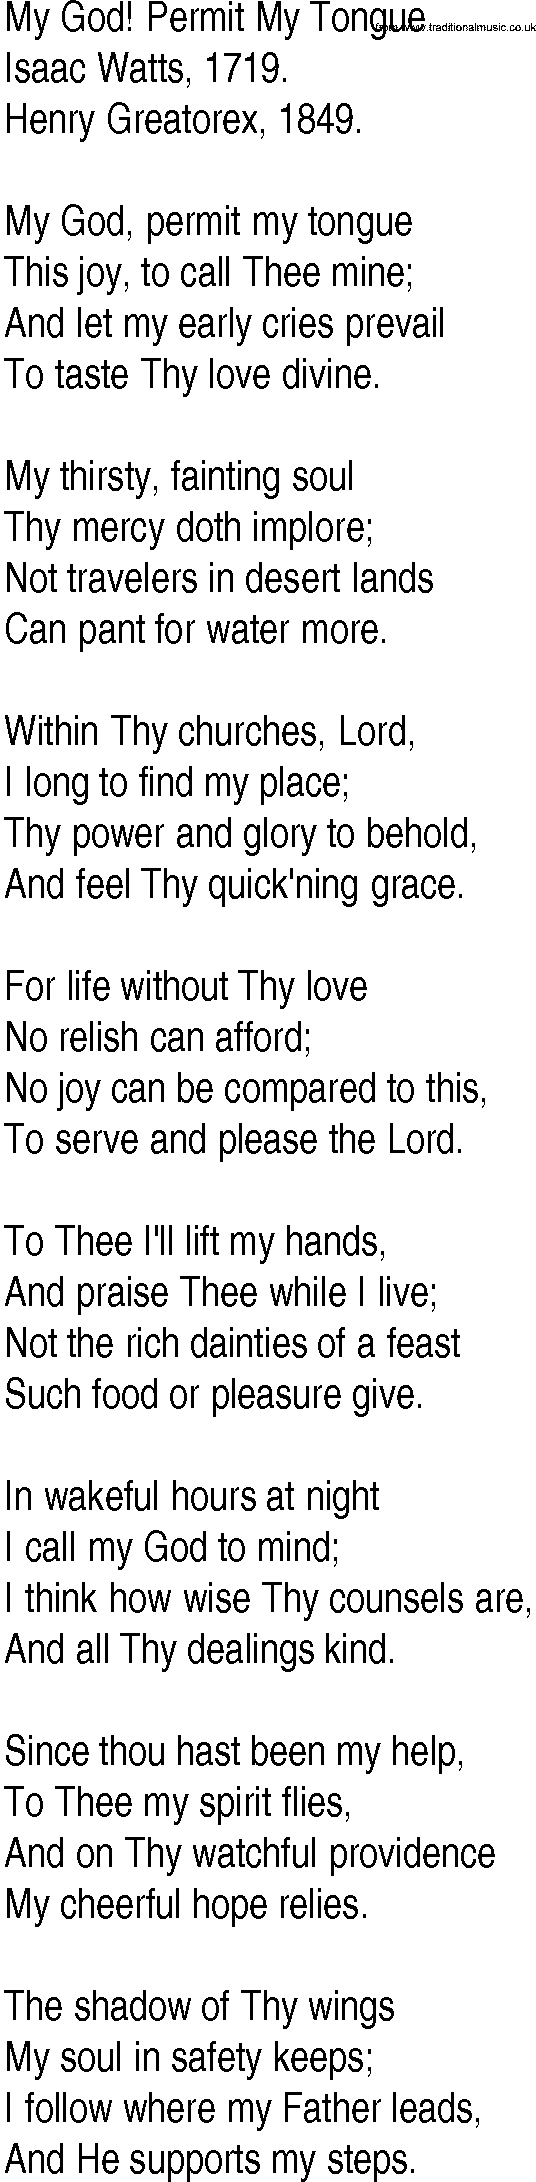 Hymn and Gospel Song: My God! Permit My Tongue by Isaac Watts lyrics